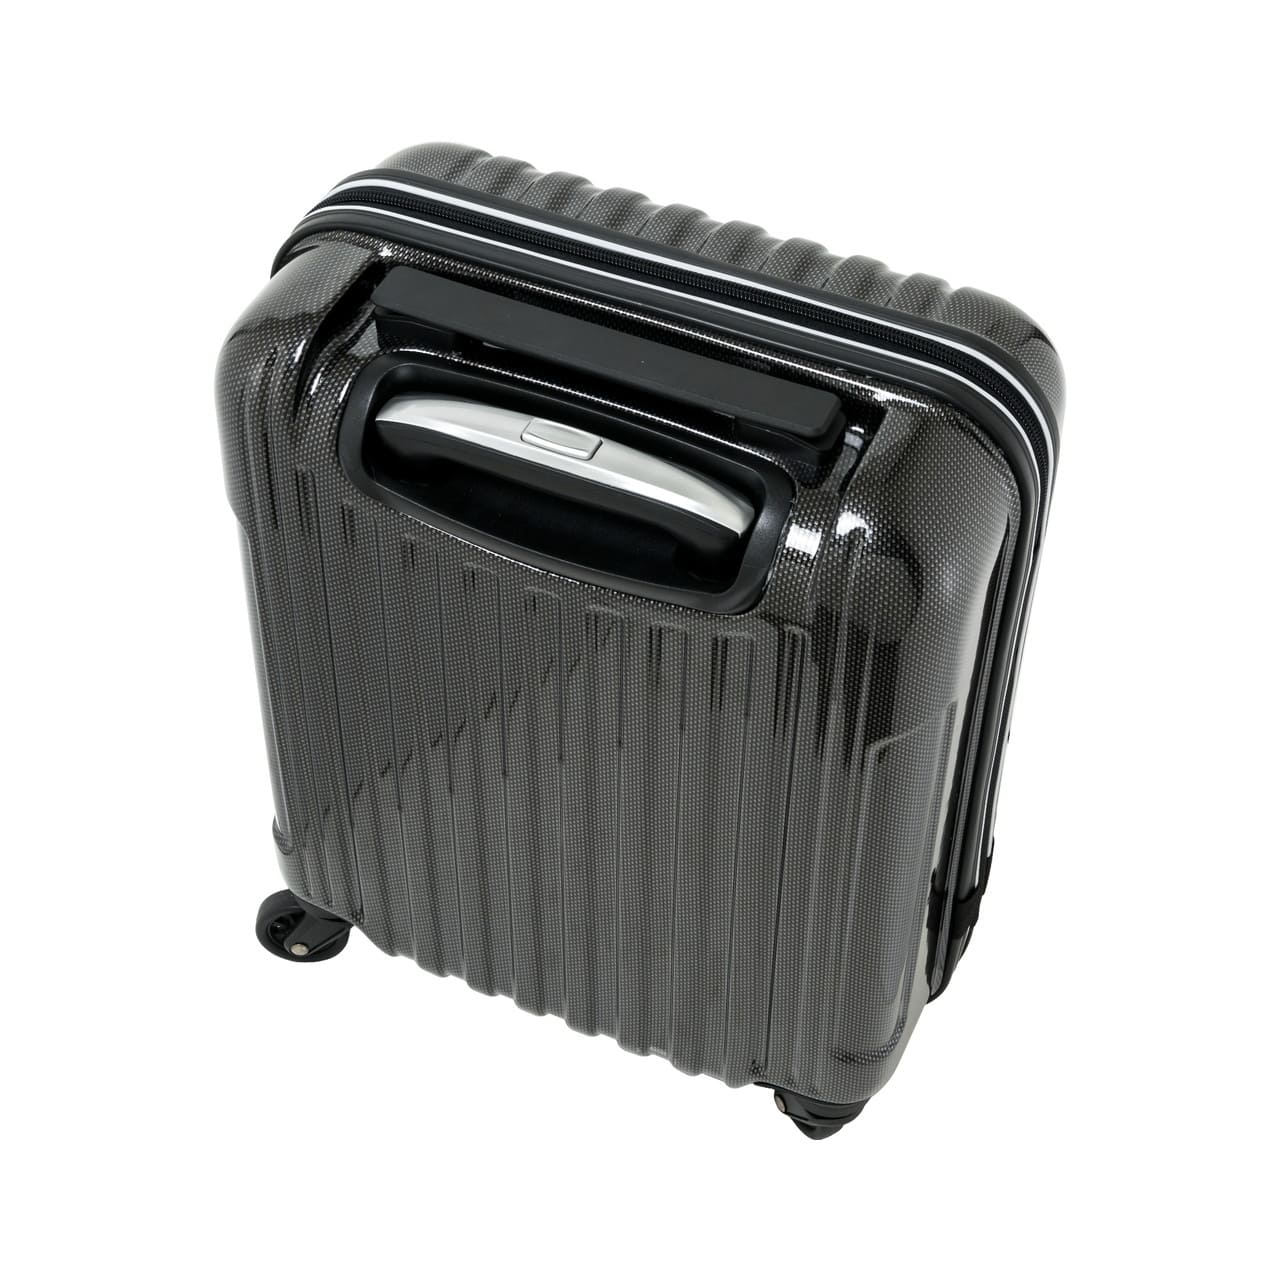 SKYNAVIGATORのスーツケースSK-0722-41のブラックカーボンのトップ斜め画像